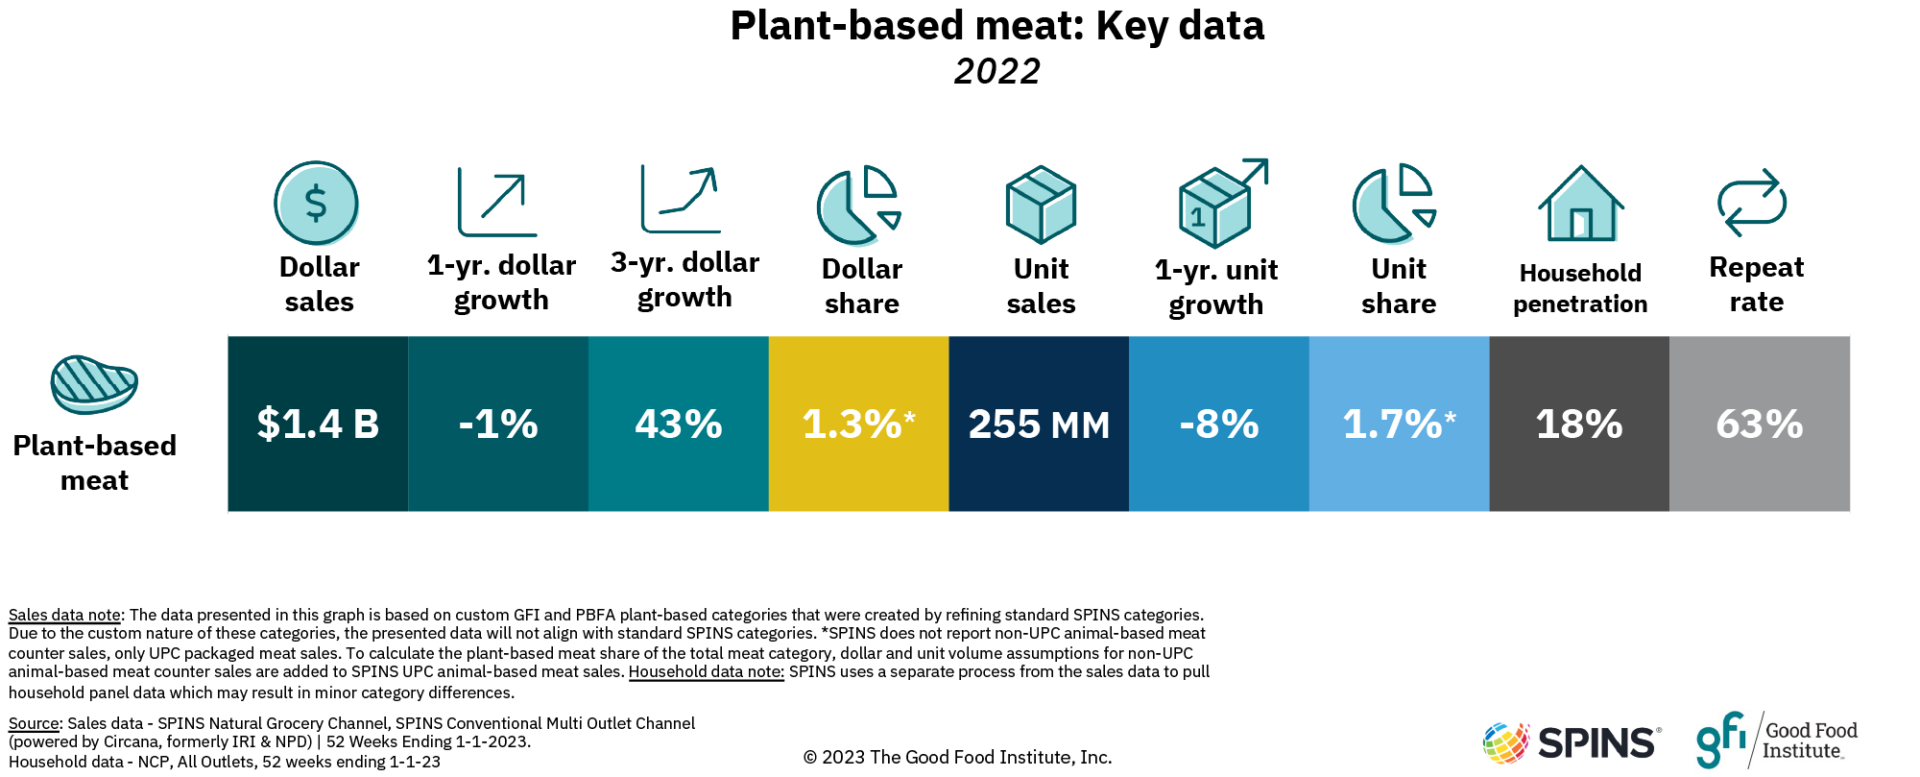 Plant-based meat key sales data summary